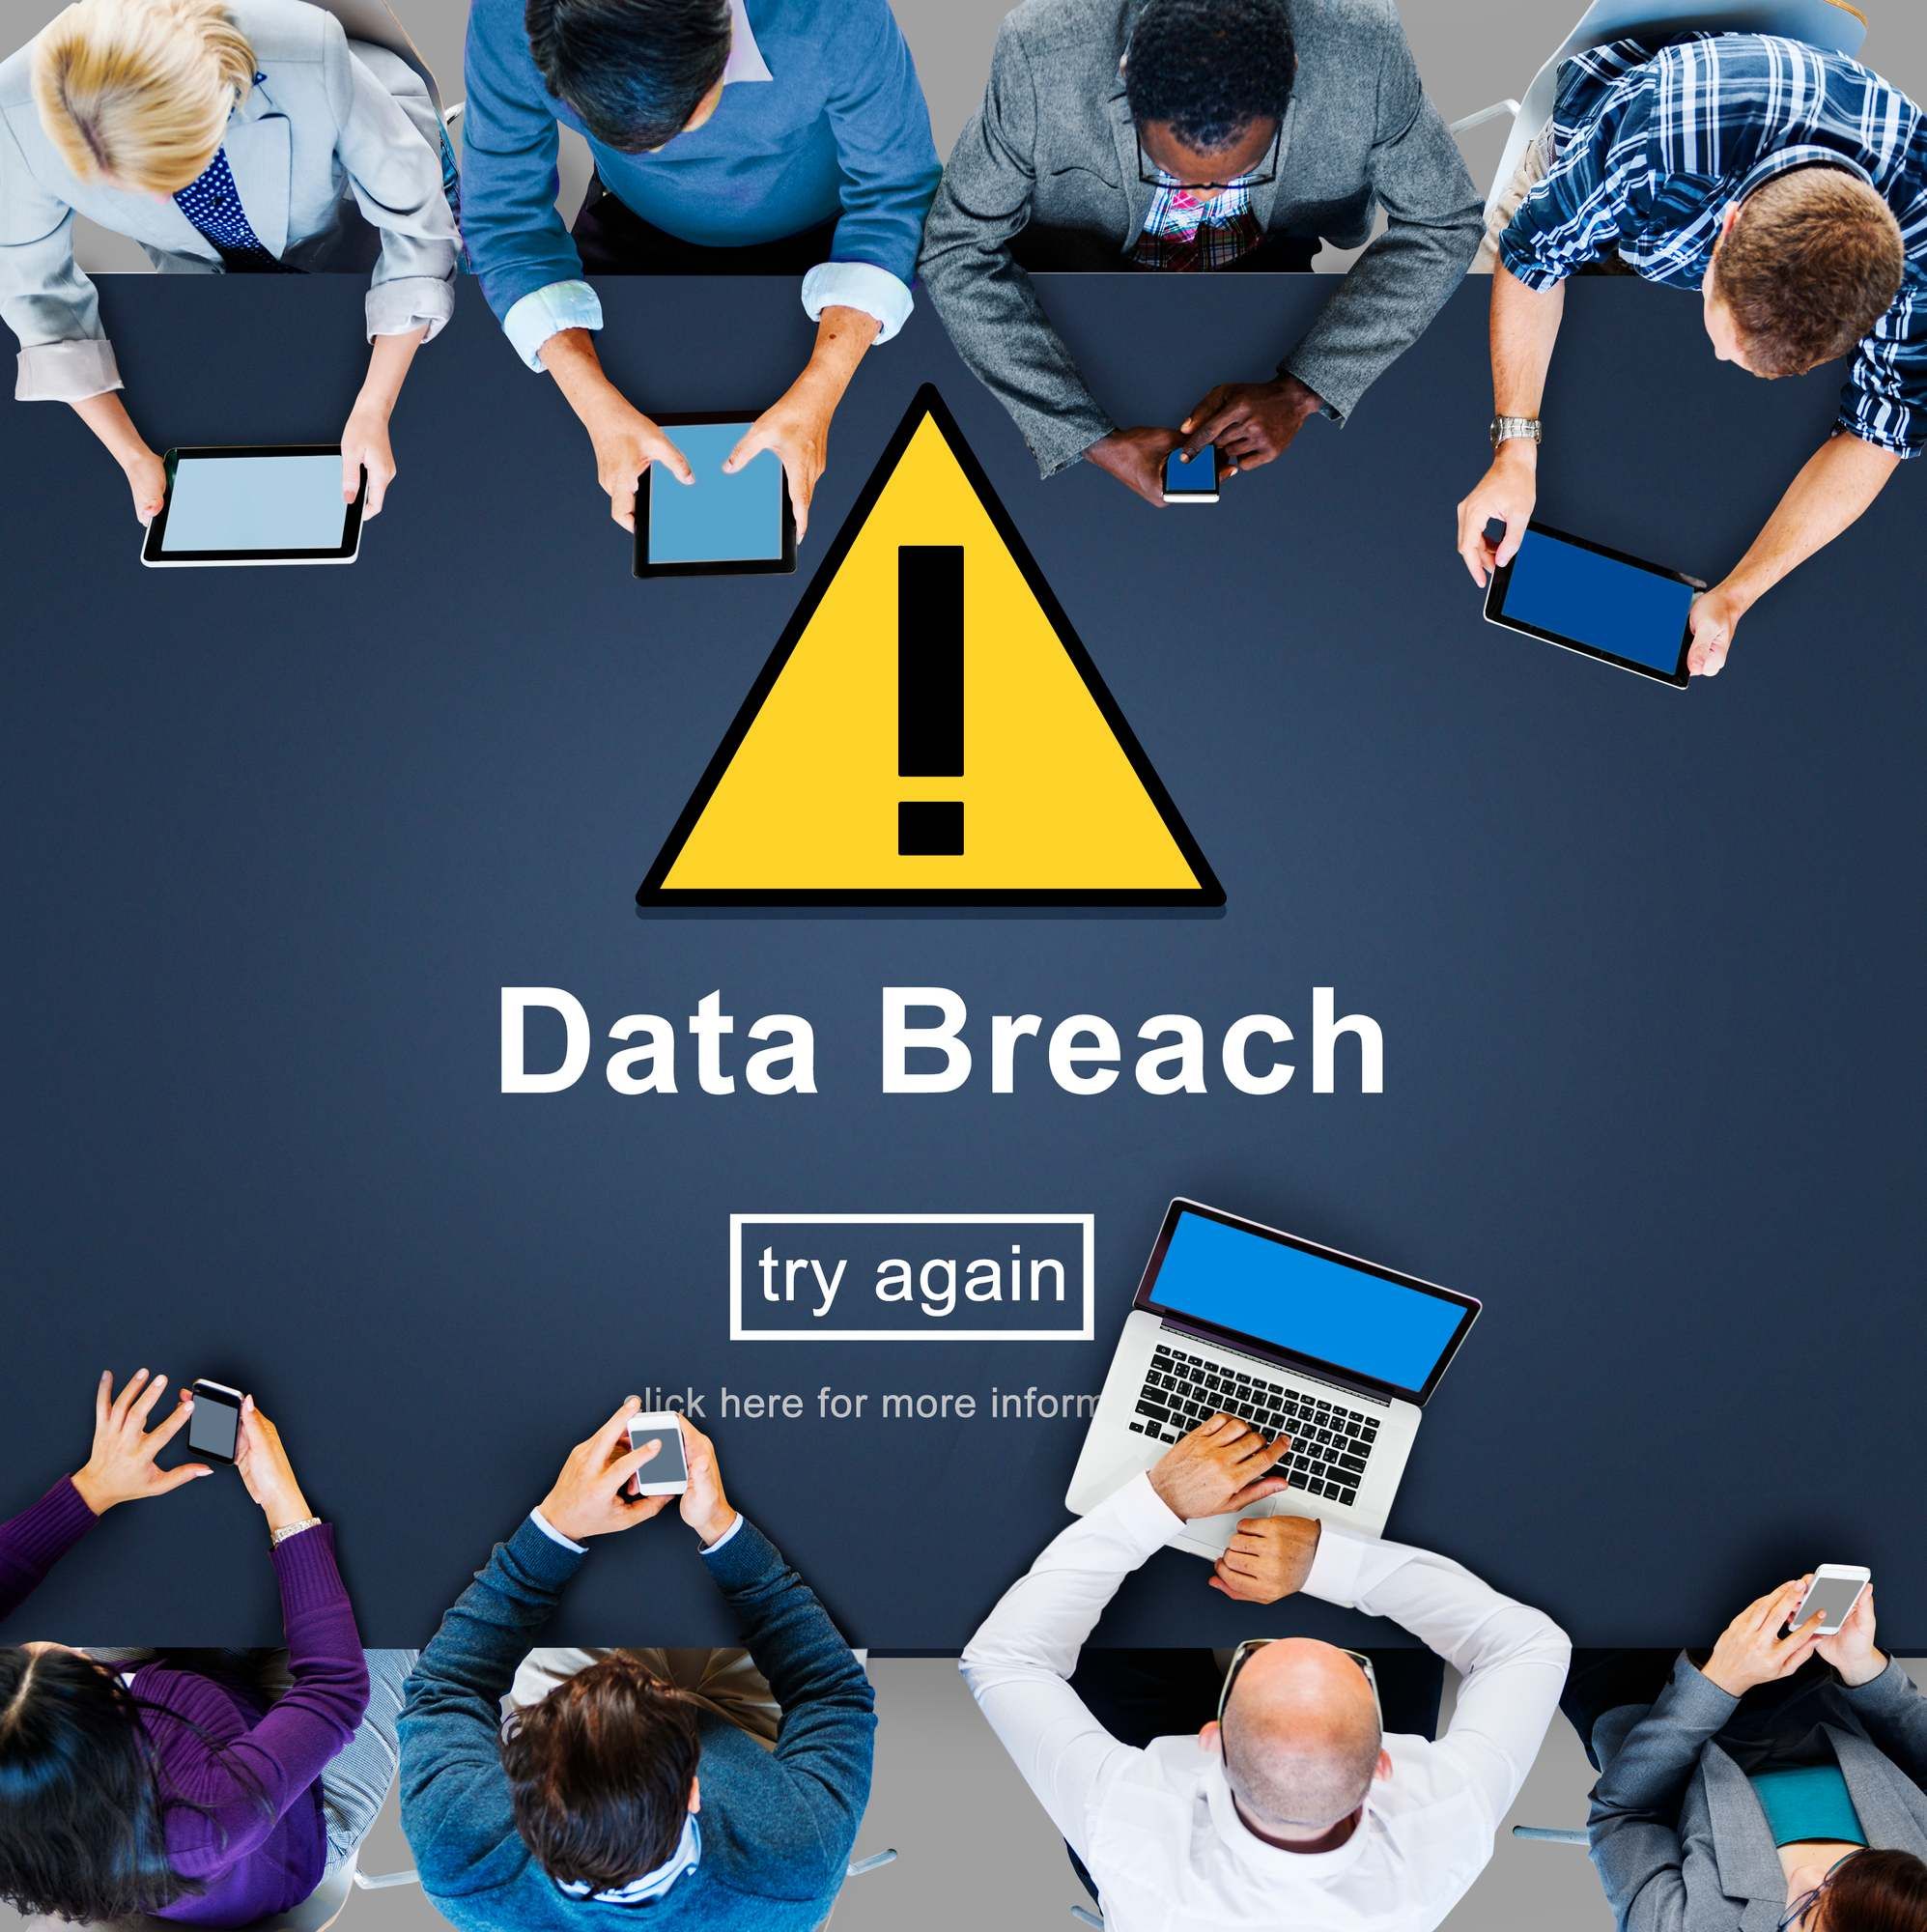 Data breach graphic regarding the TalkTalk data breach Group action open claim